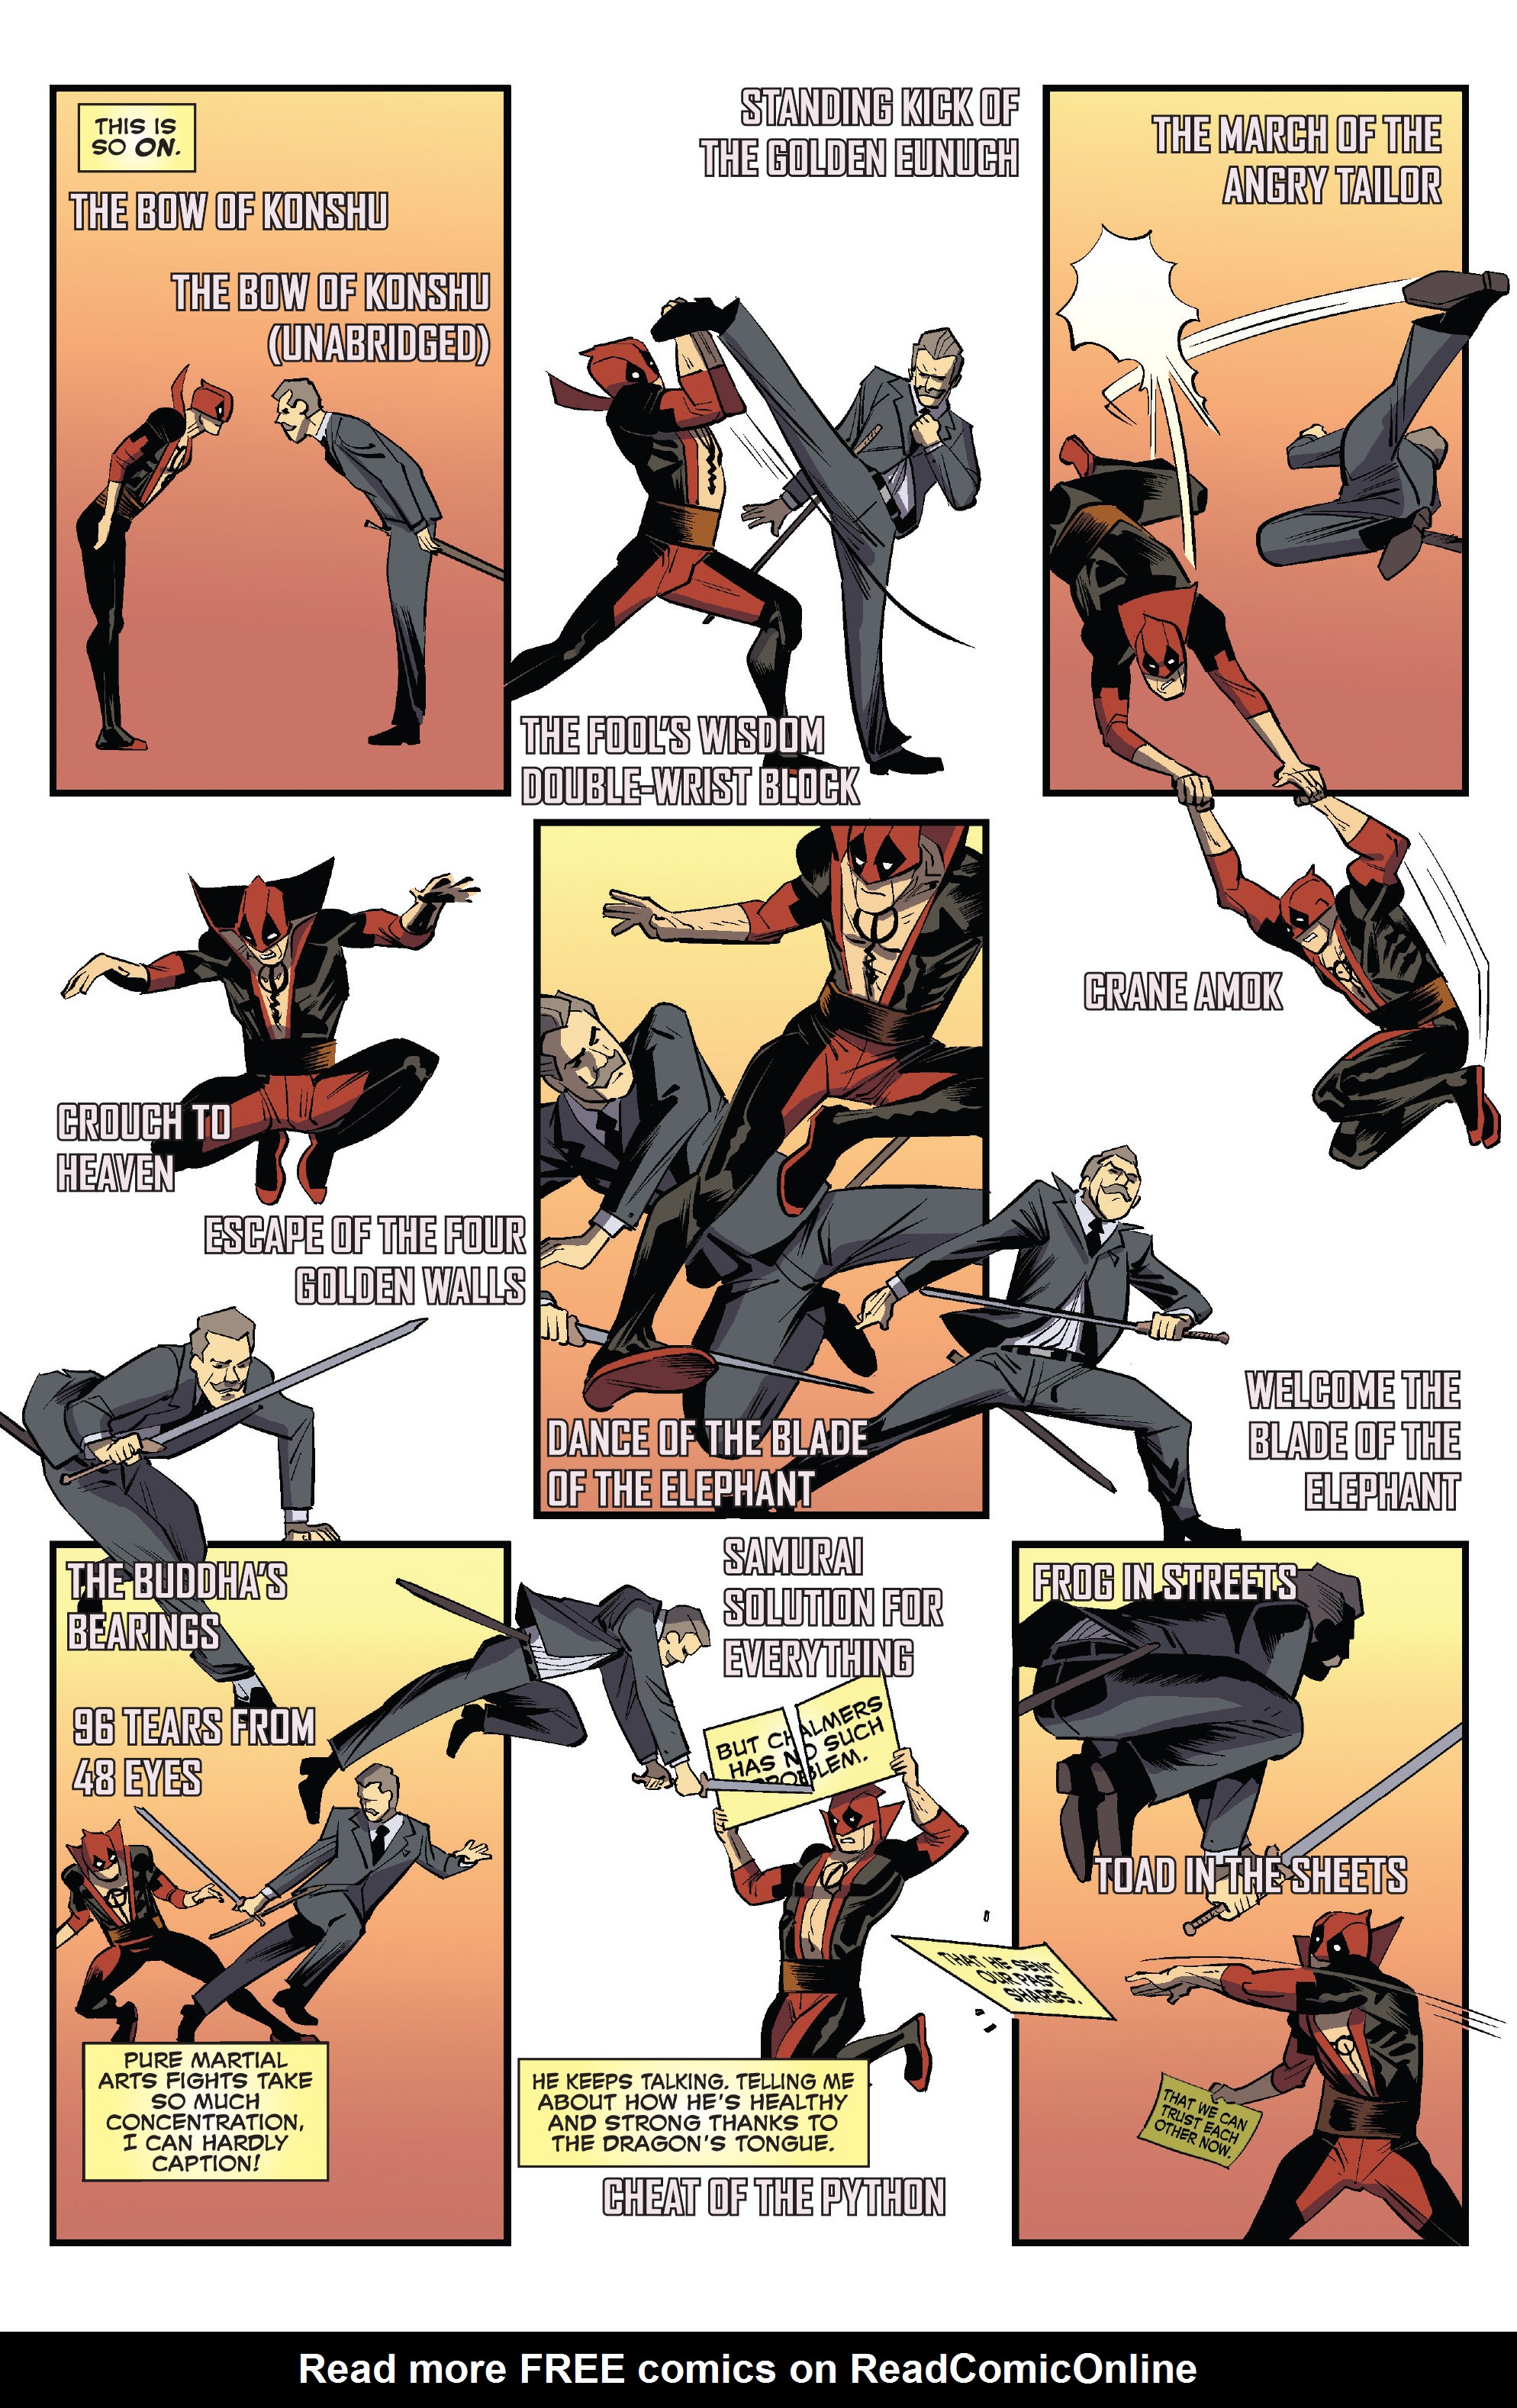 Read Online Deadpool V Gambit Comic Issue 5